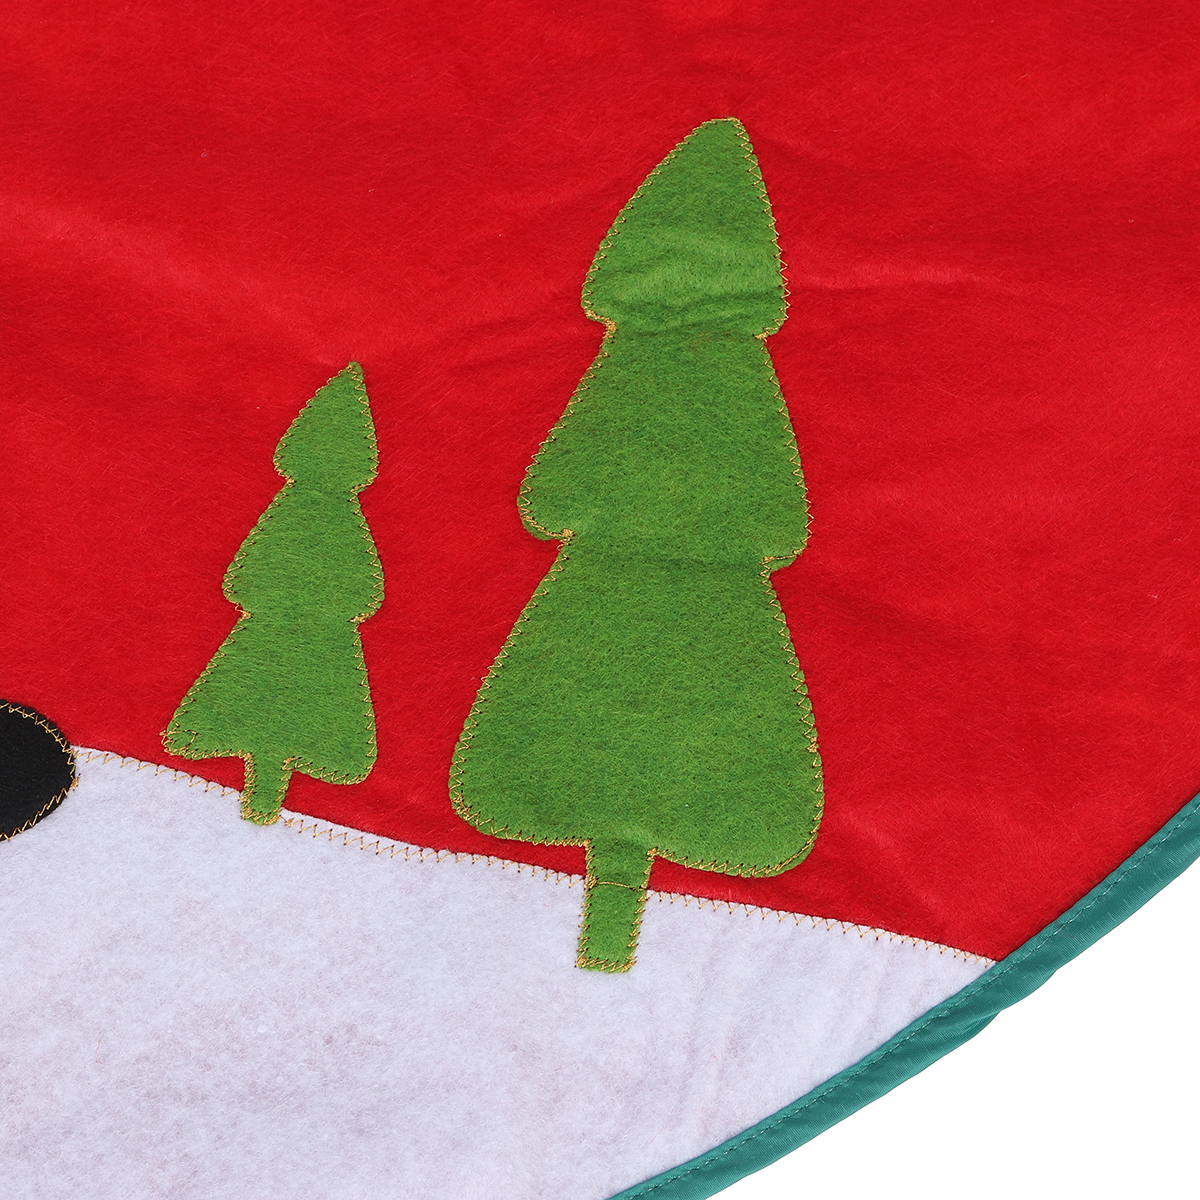 2020-Christmas-Decor-Santa-Claus-Christmas-Tree-Skirt-Aprons-New-Year-Xmas-Tree-Carpet-Foot-Cover-fo-1770951-8